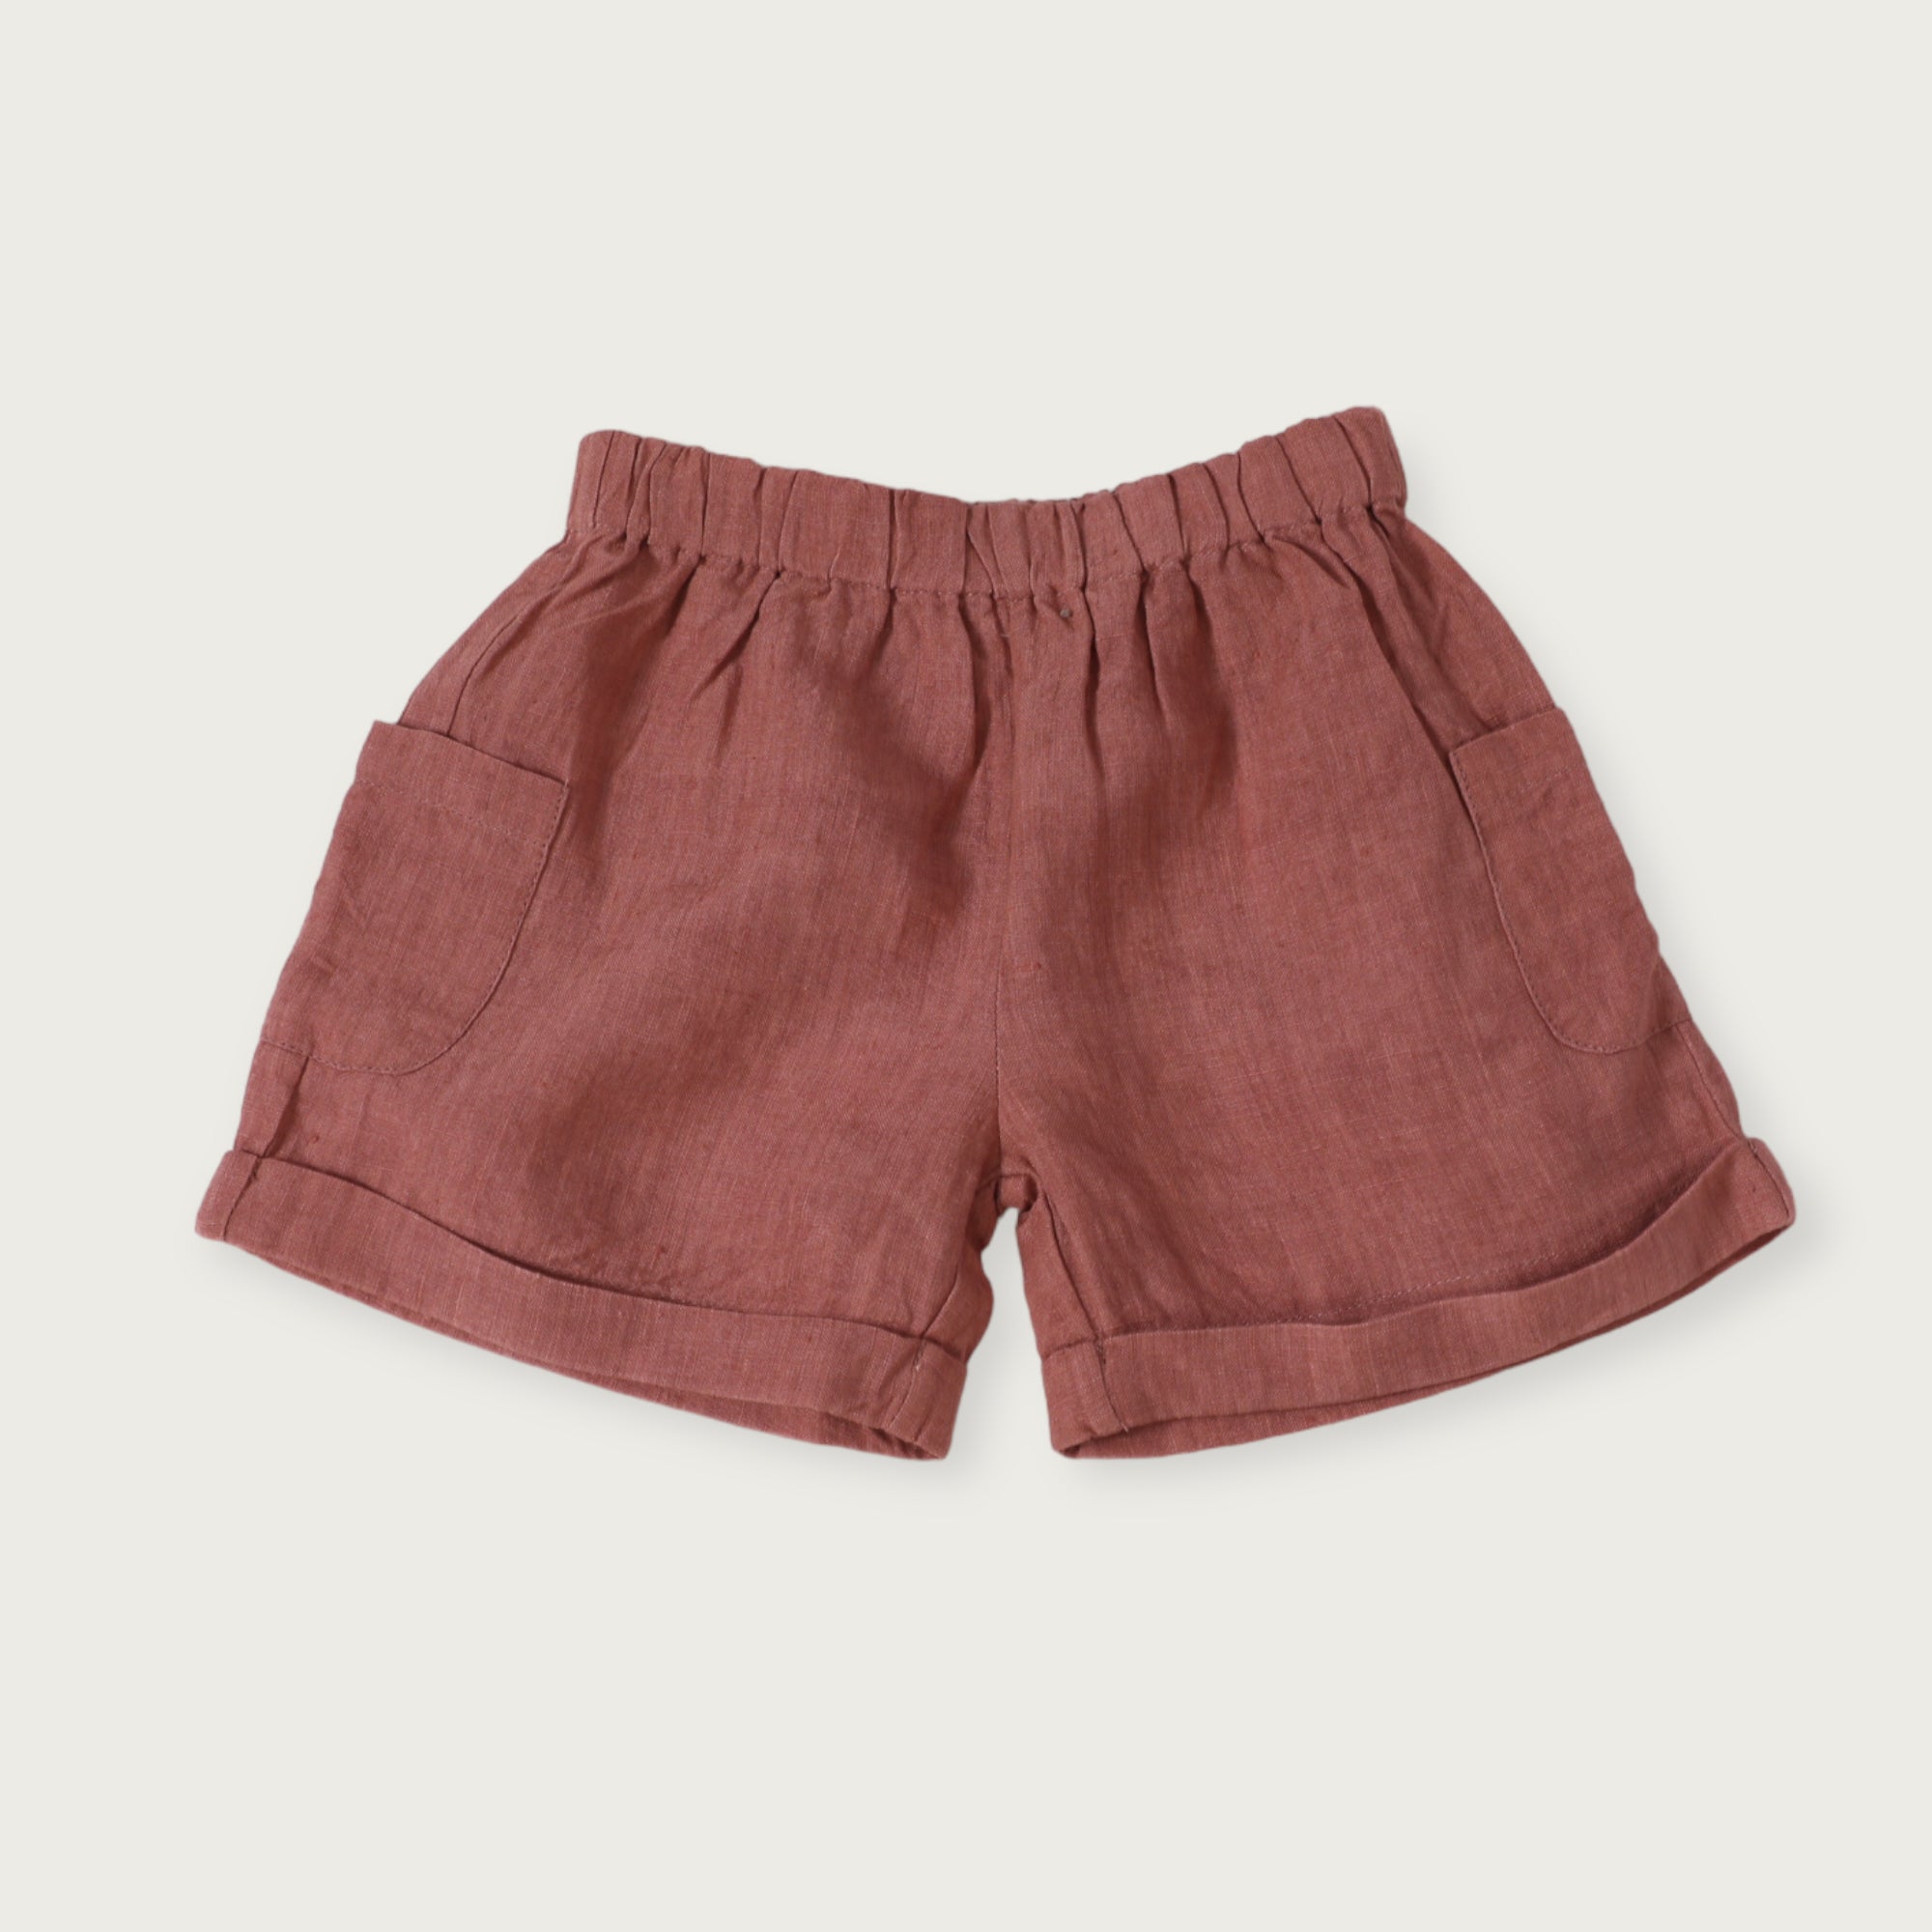 Laurence Mandarin Collar Baby Shirt + Linen Shorts 2pc Set